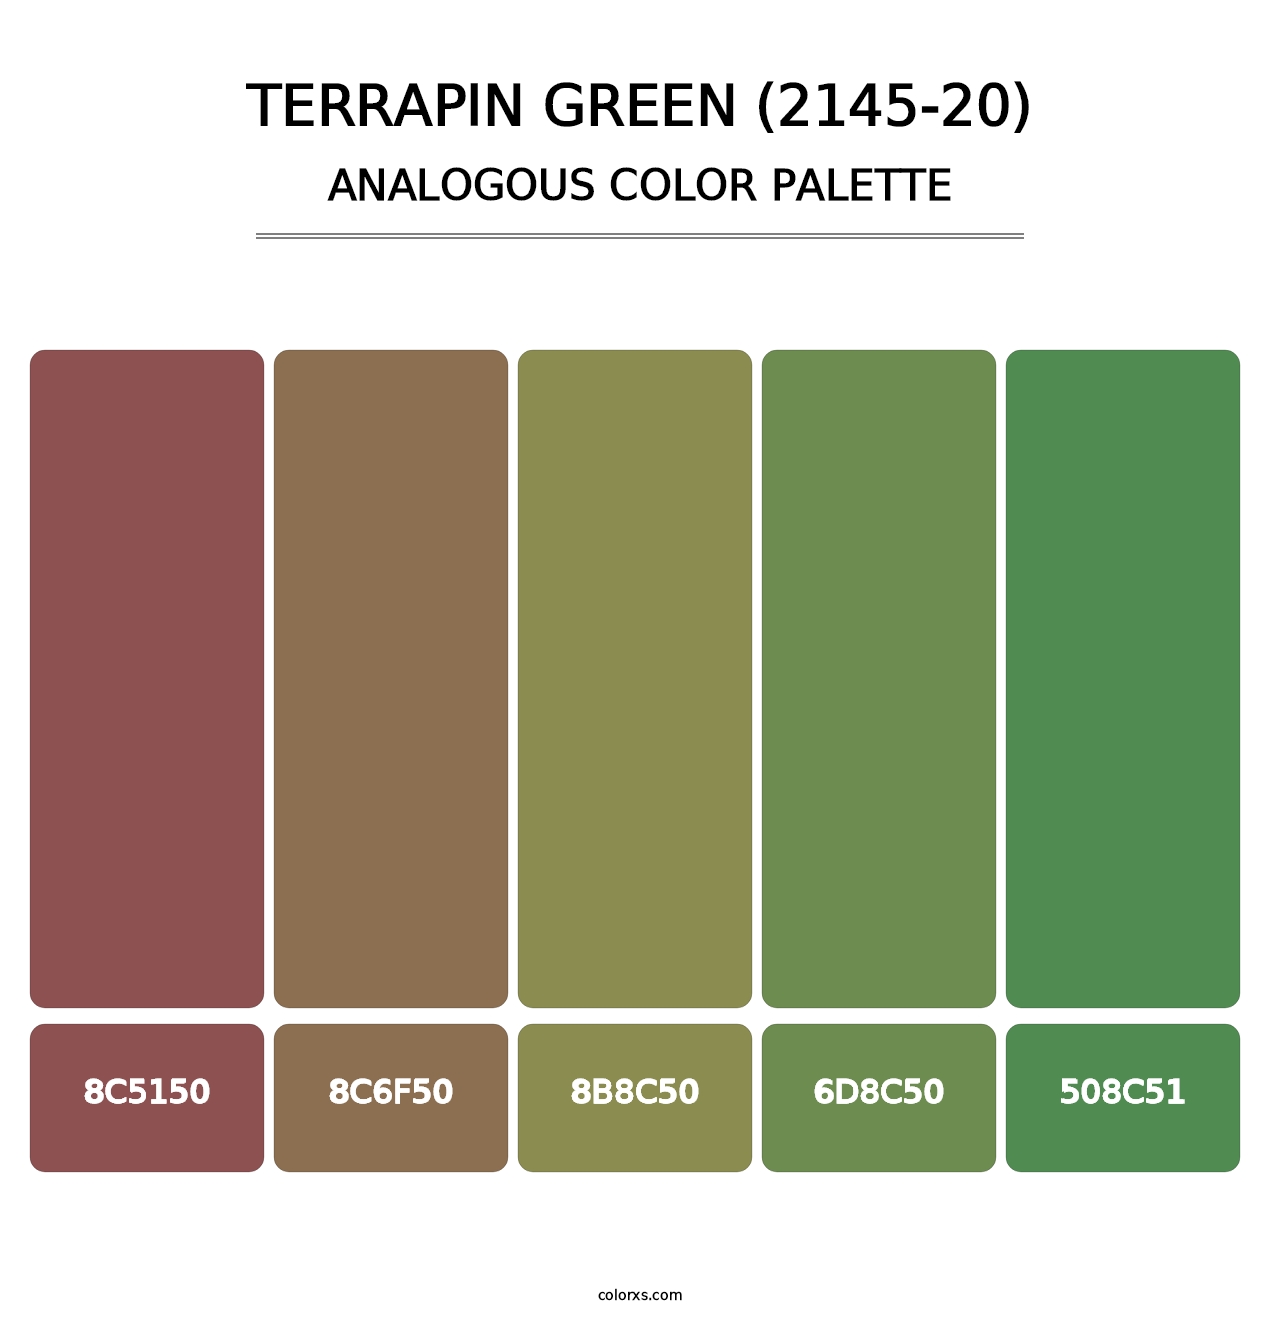 Terrapin Green (2145-20) - Analogous Color Palette